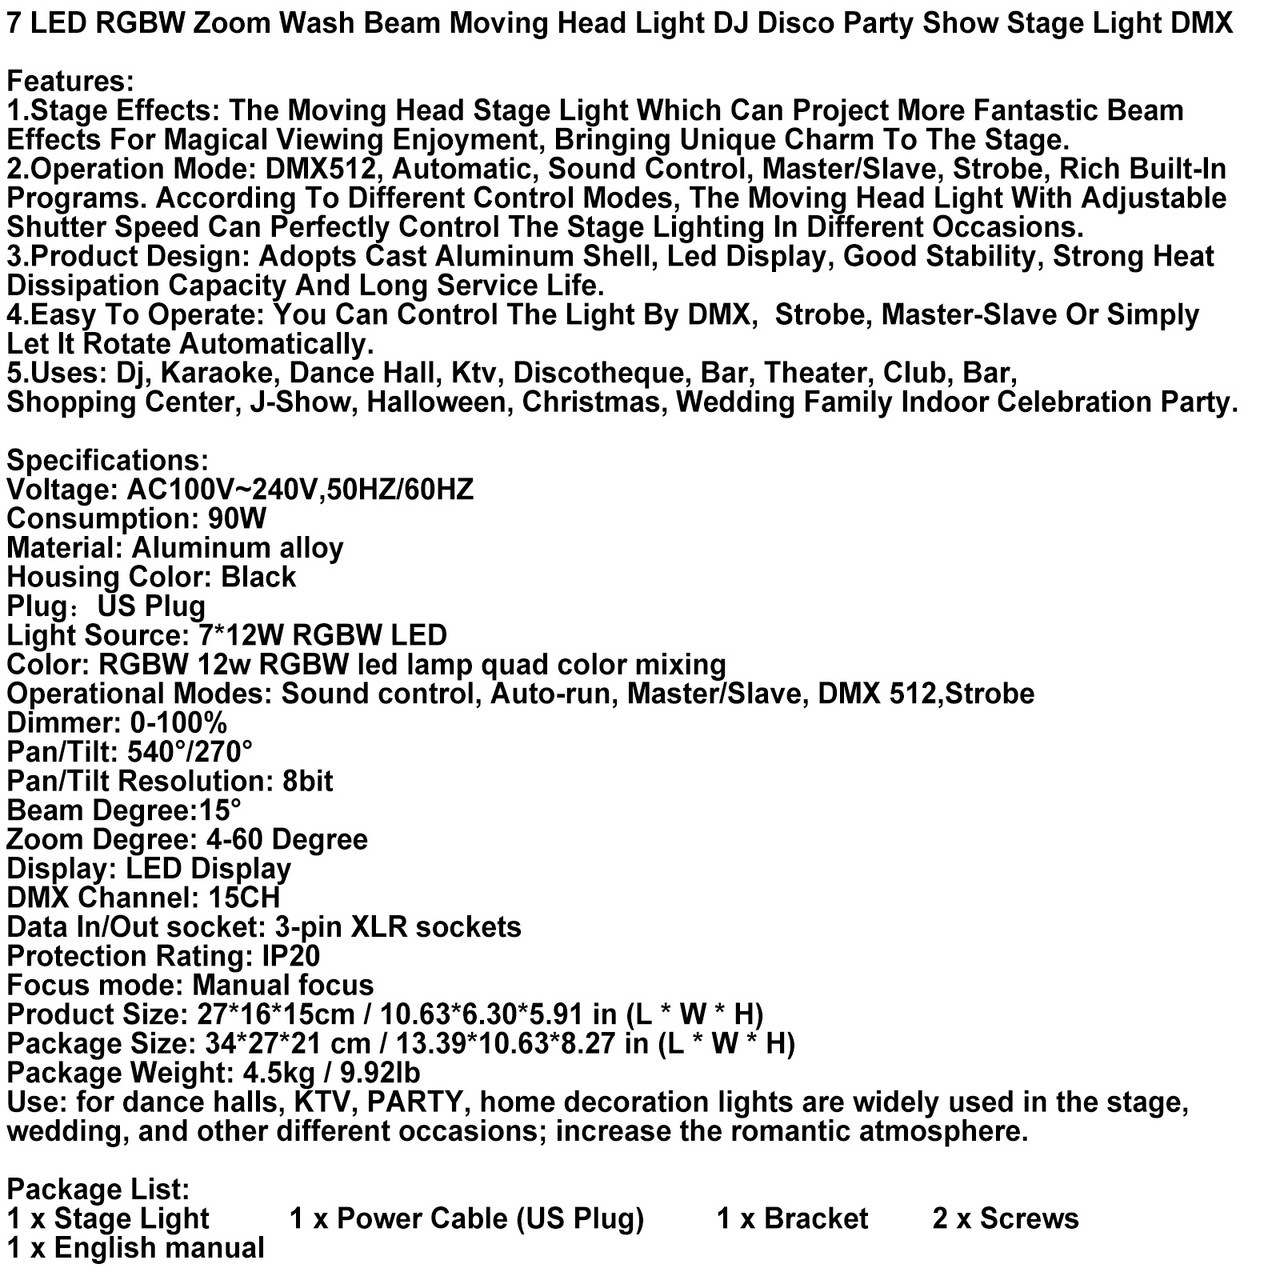 7 LED RGBW Zoom Wash Beam Moving Head Light DJ Disco Party Show Stage Light DMX